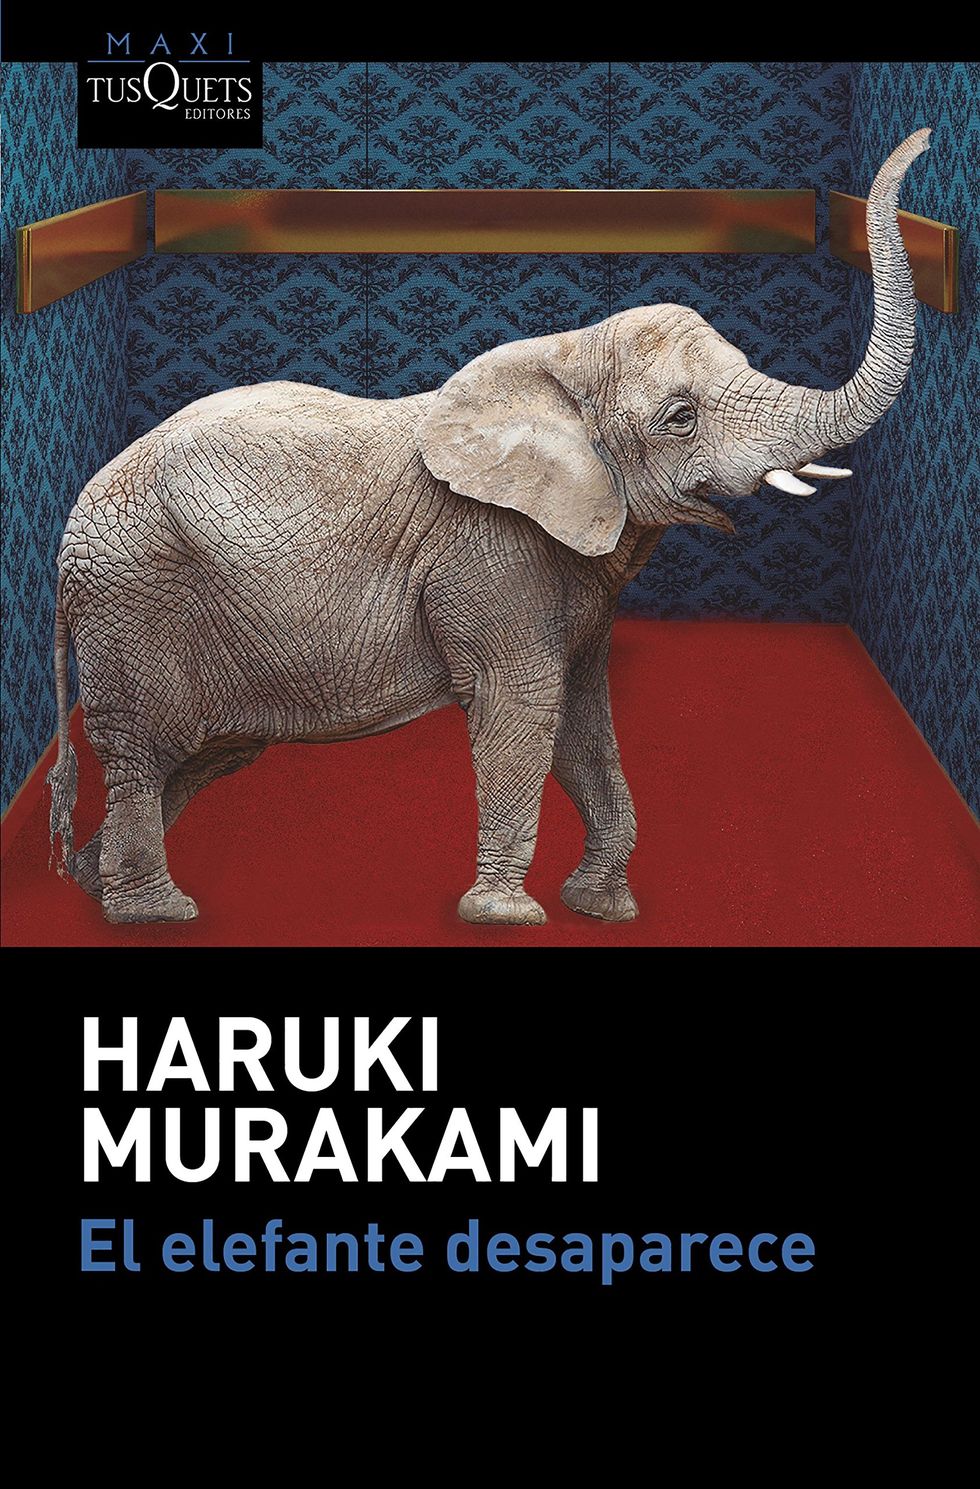 El elefante desaparece Haruki Murakami